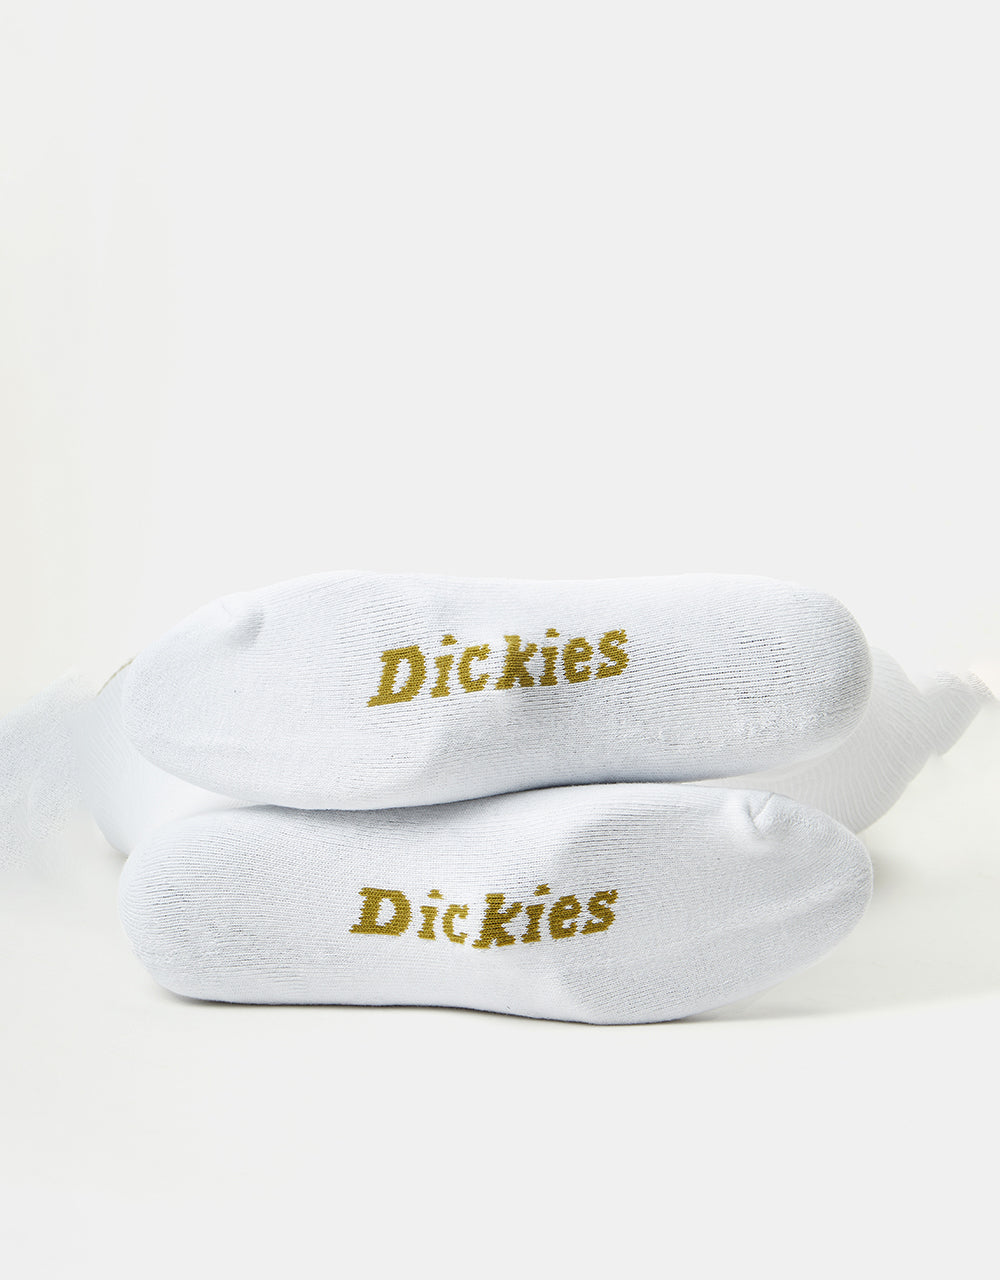 Dickies Lutak Crew Socks - Green Moss